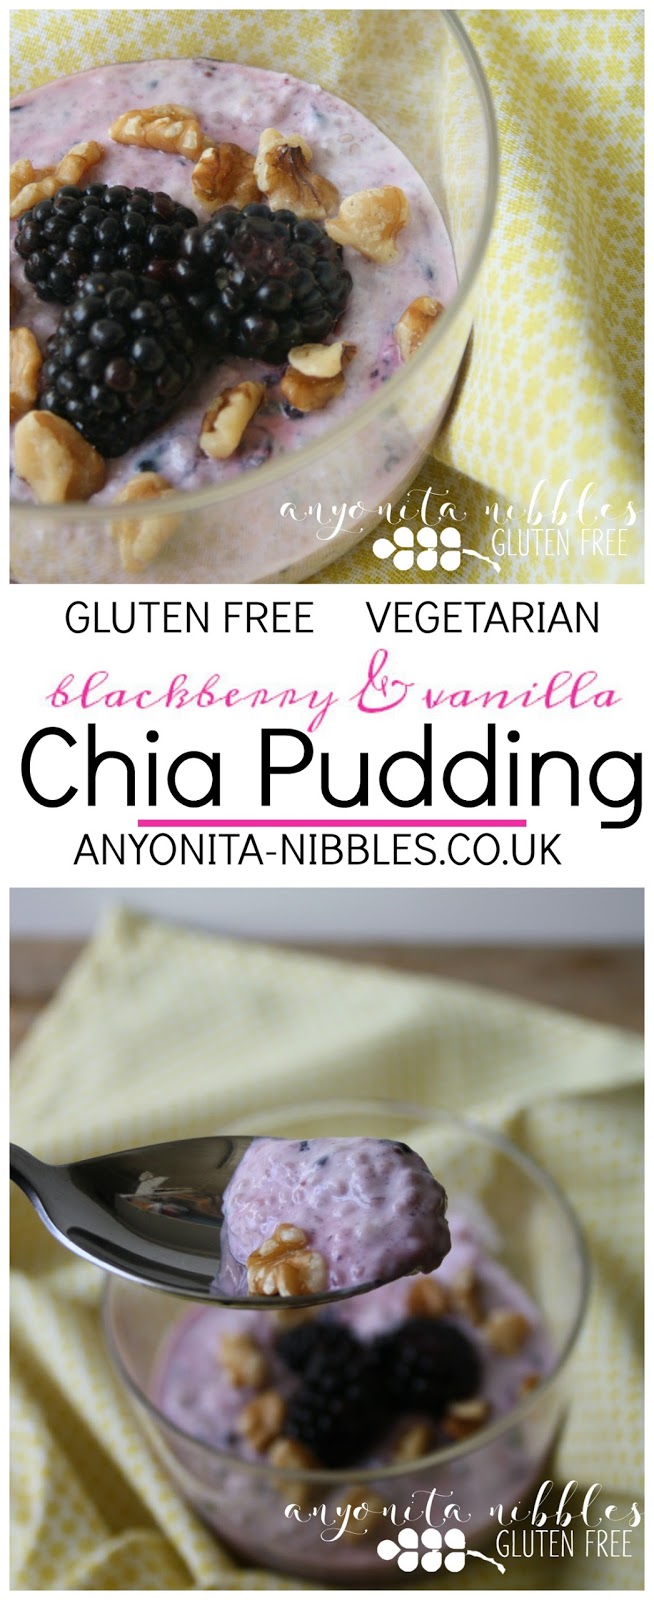 Gluten Free and Vegetarian Blackberry Vanilla Chia Pudding | Anyonita-Nibbles.co.uk